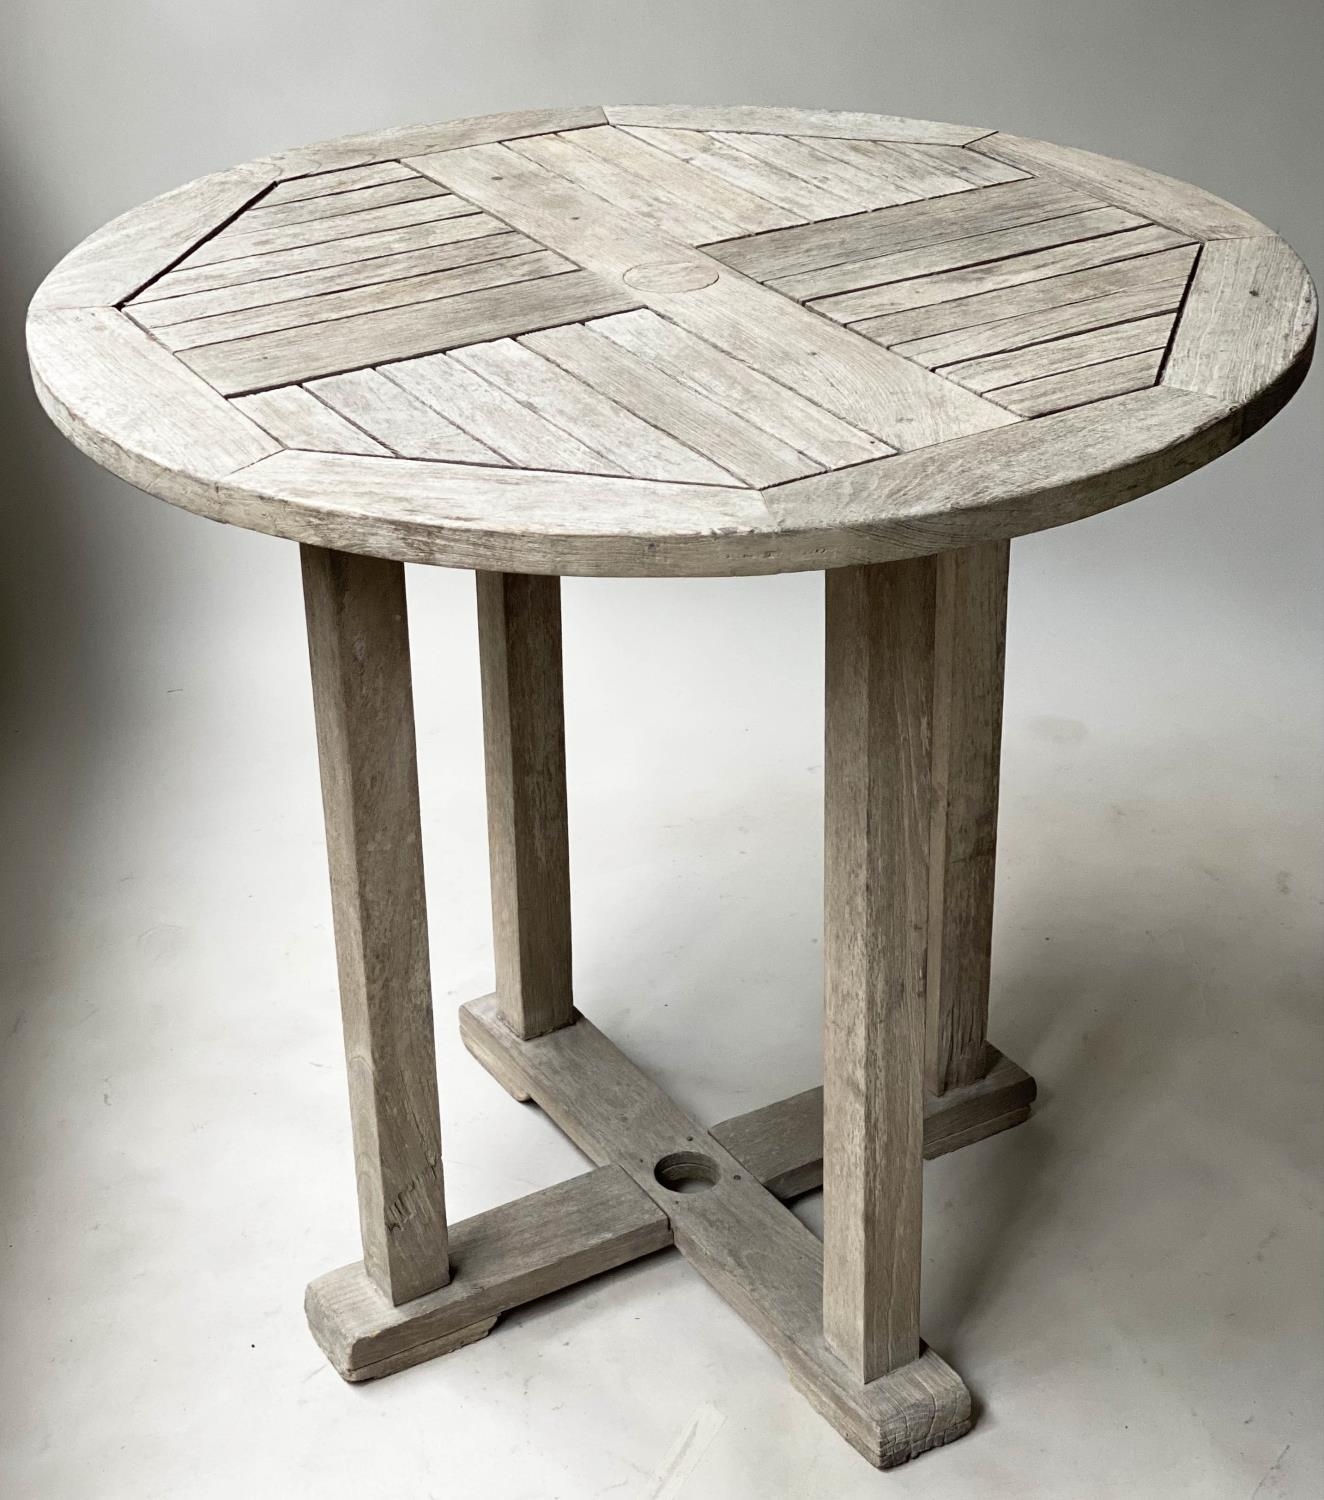 GARDEN TABLE, circular slatted weathered teak together with a Java teak garden armchair, 80cm diam x - Image 9 of 9